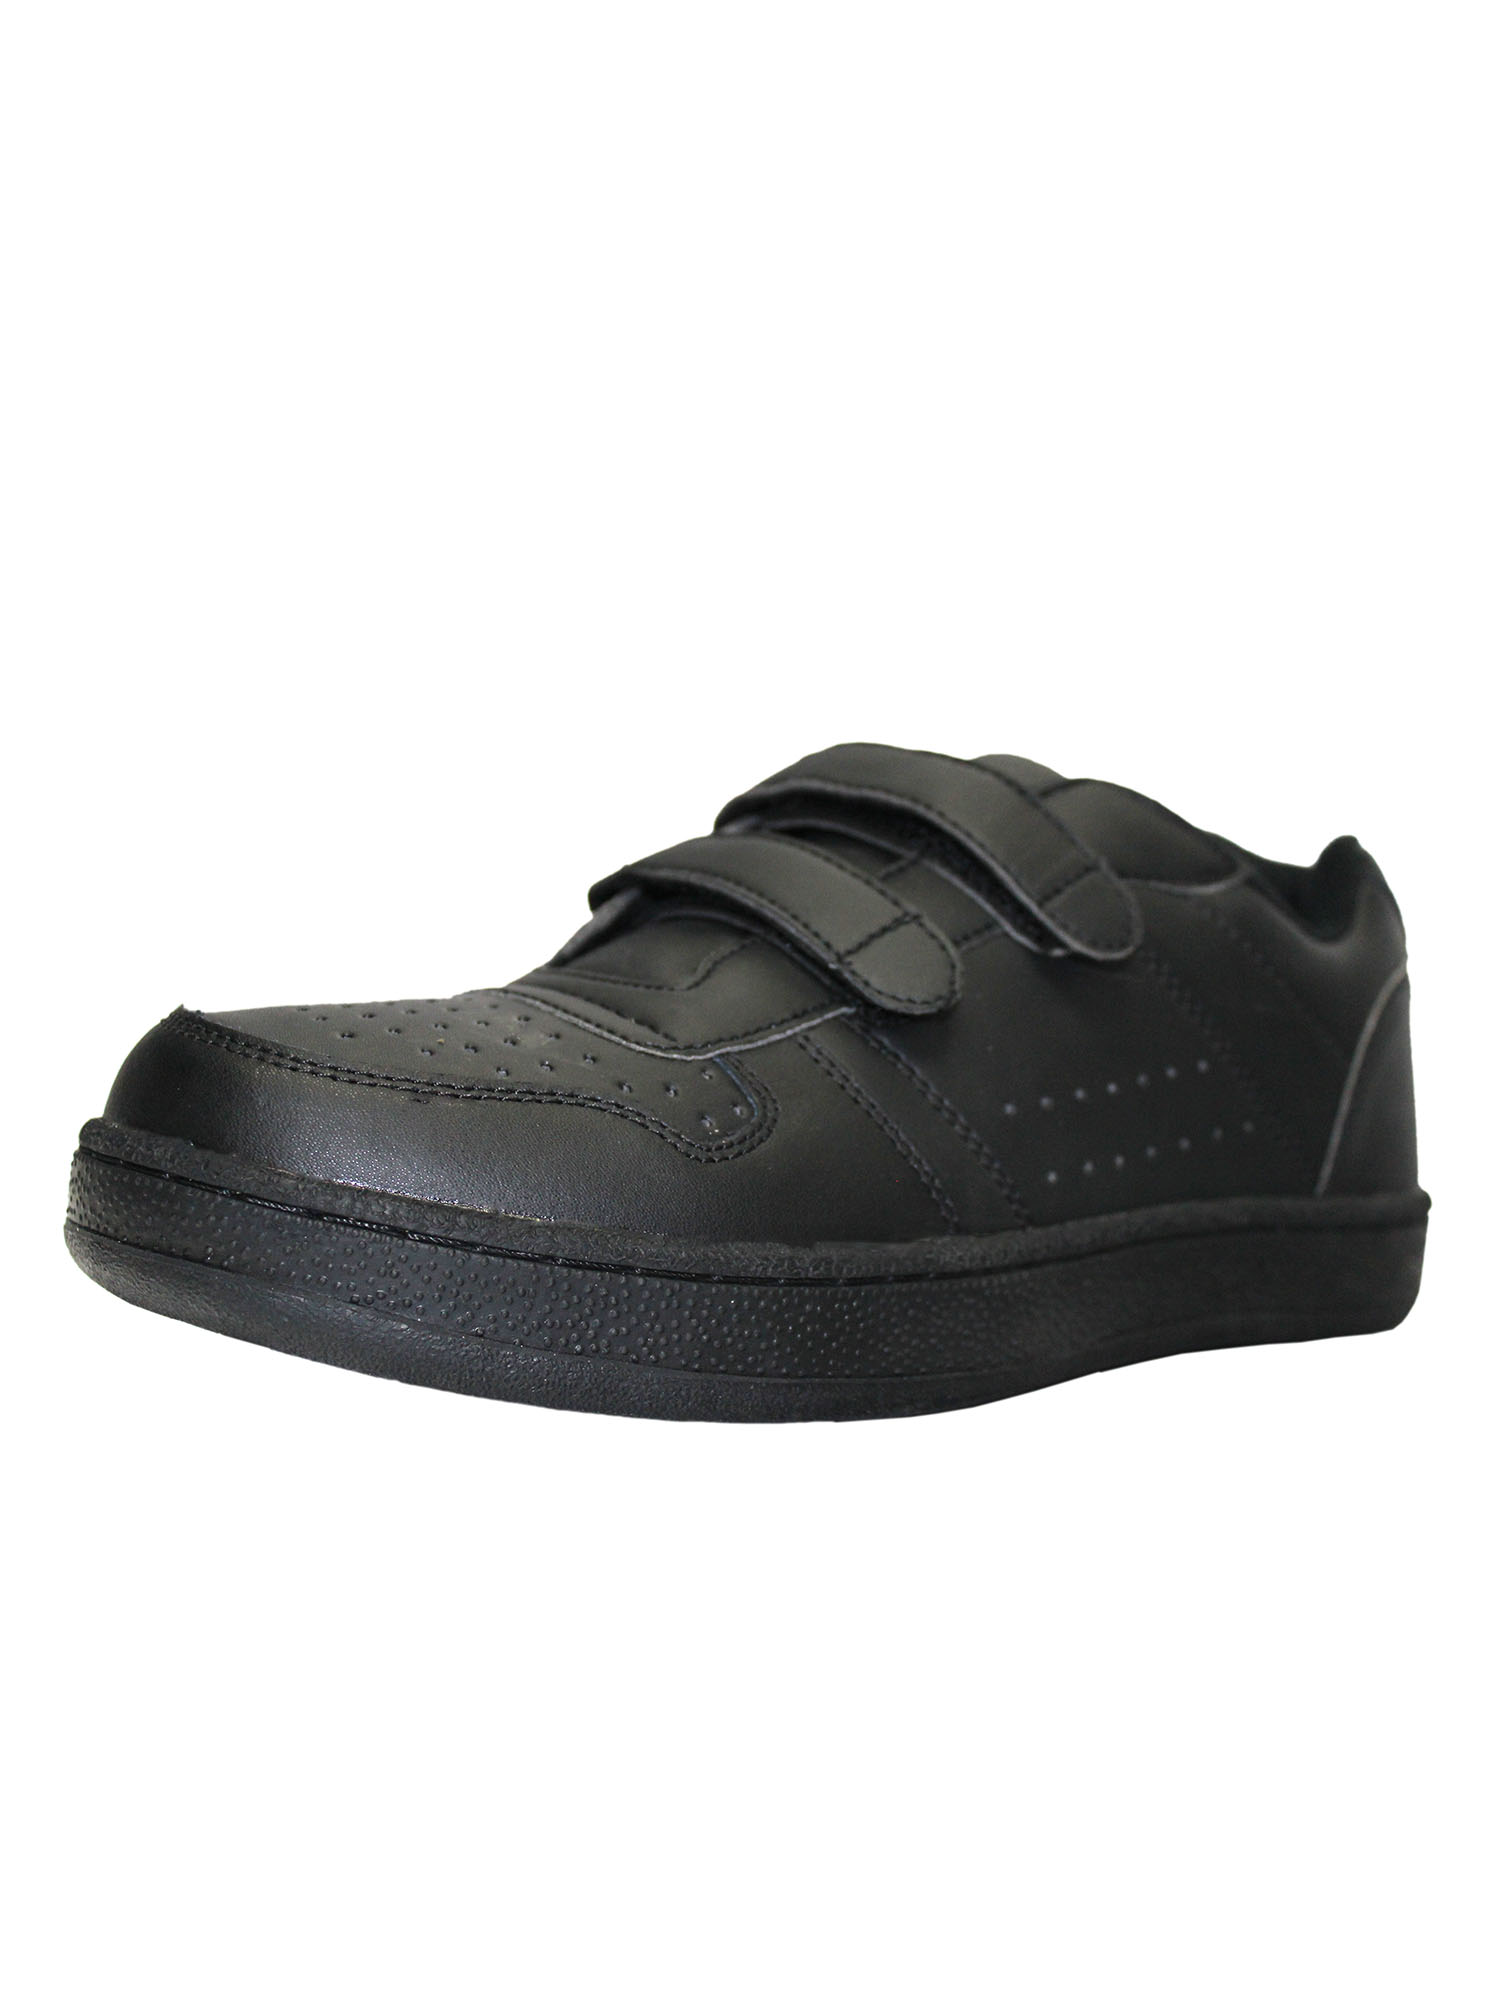 Tanleewa Men's Leather Strap Sneakers Lightweight Hook and Loop Walking Shoe Size 8.5 Adult Male - image 1 of 4